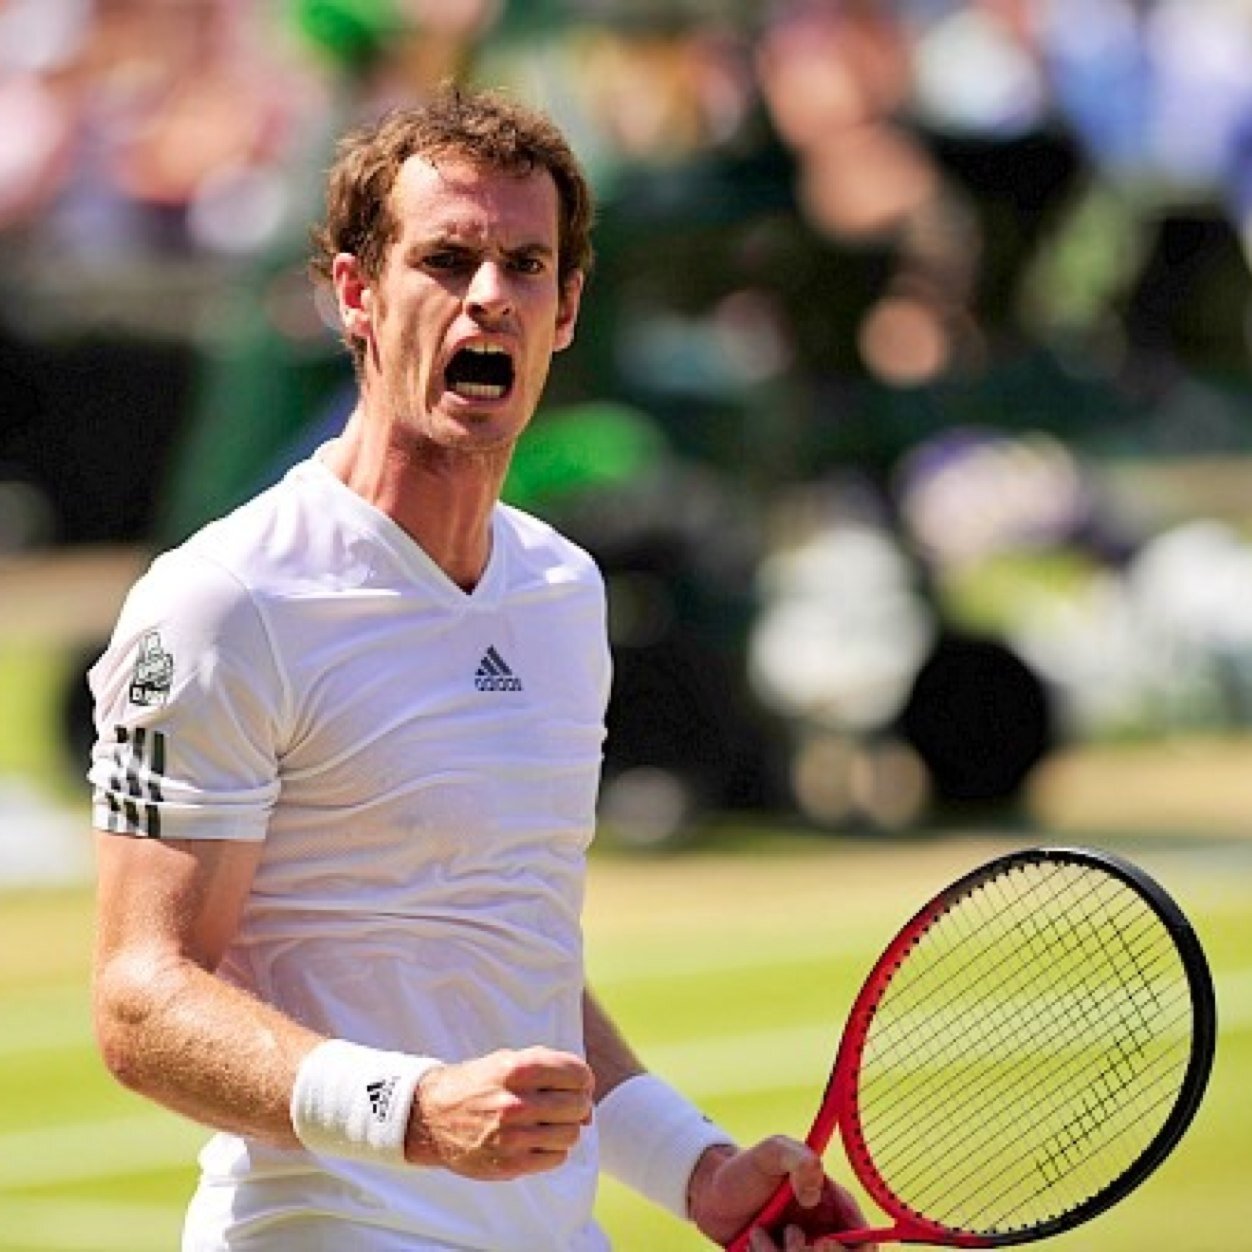 Tennis news and views with a focus on @Wimbledon champion @andy_murray. #ATP #Tennis #Murray #DavisCup